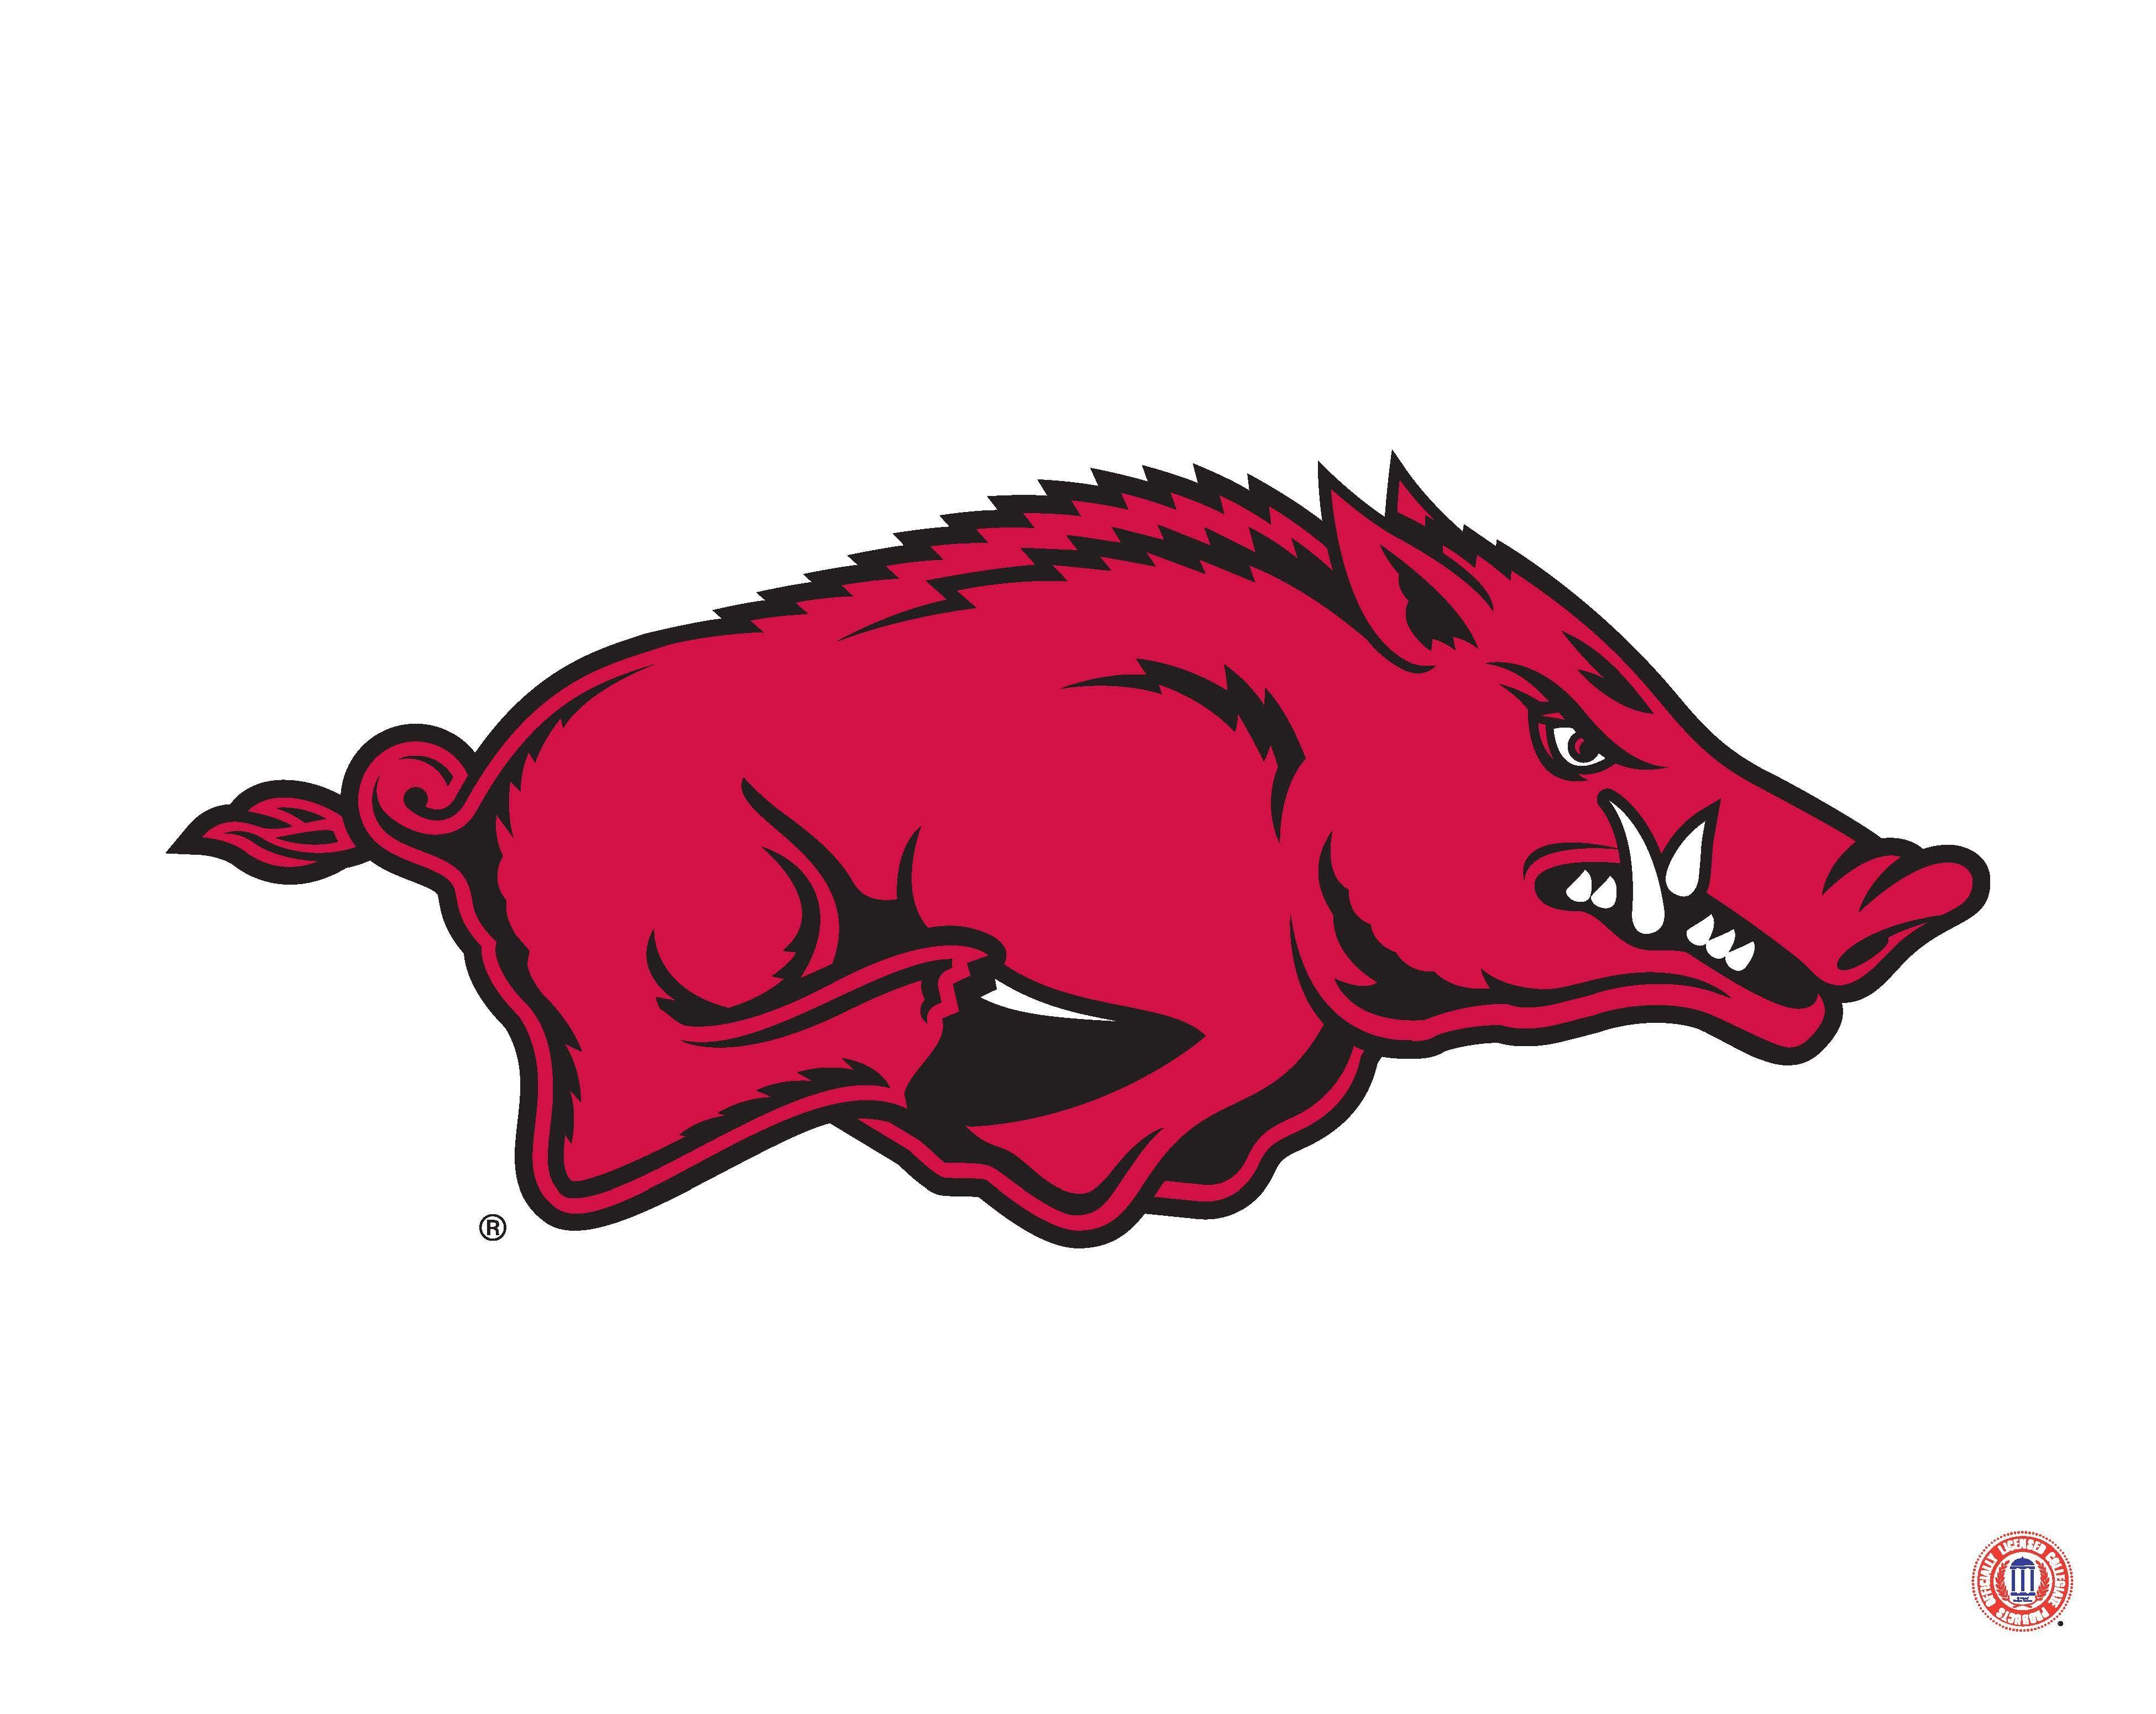 Arkansas Razorbacks mascot logo